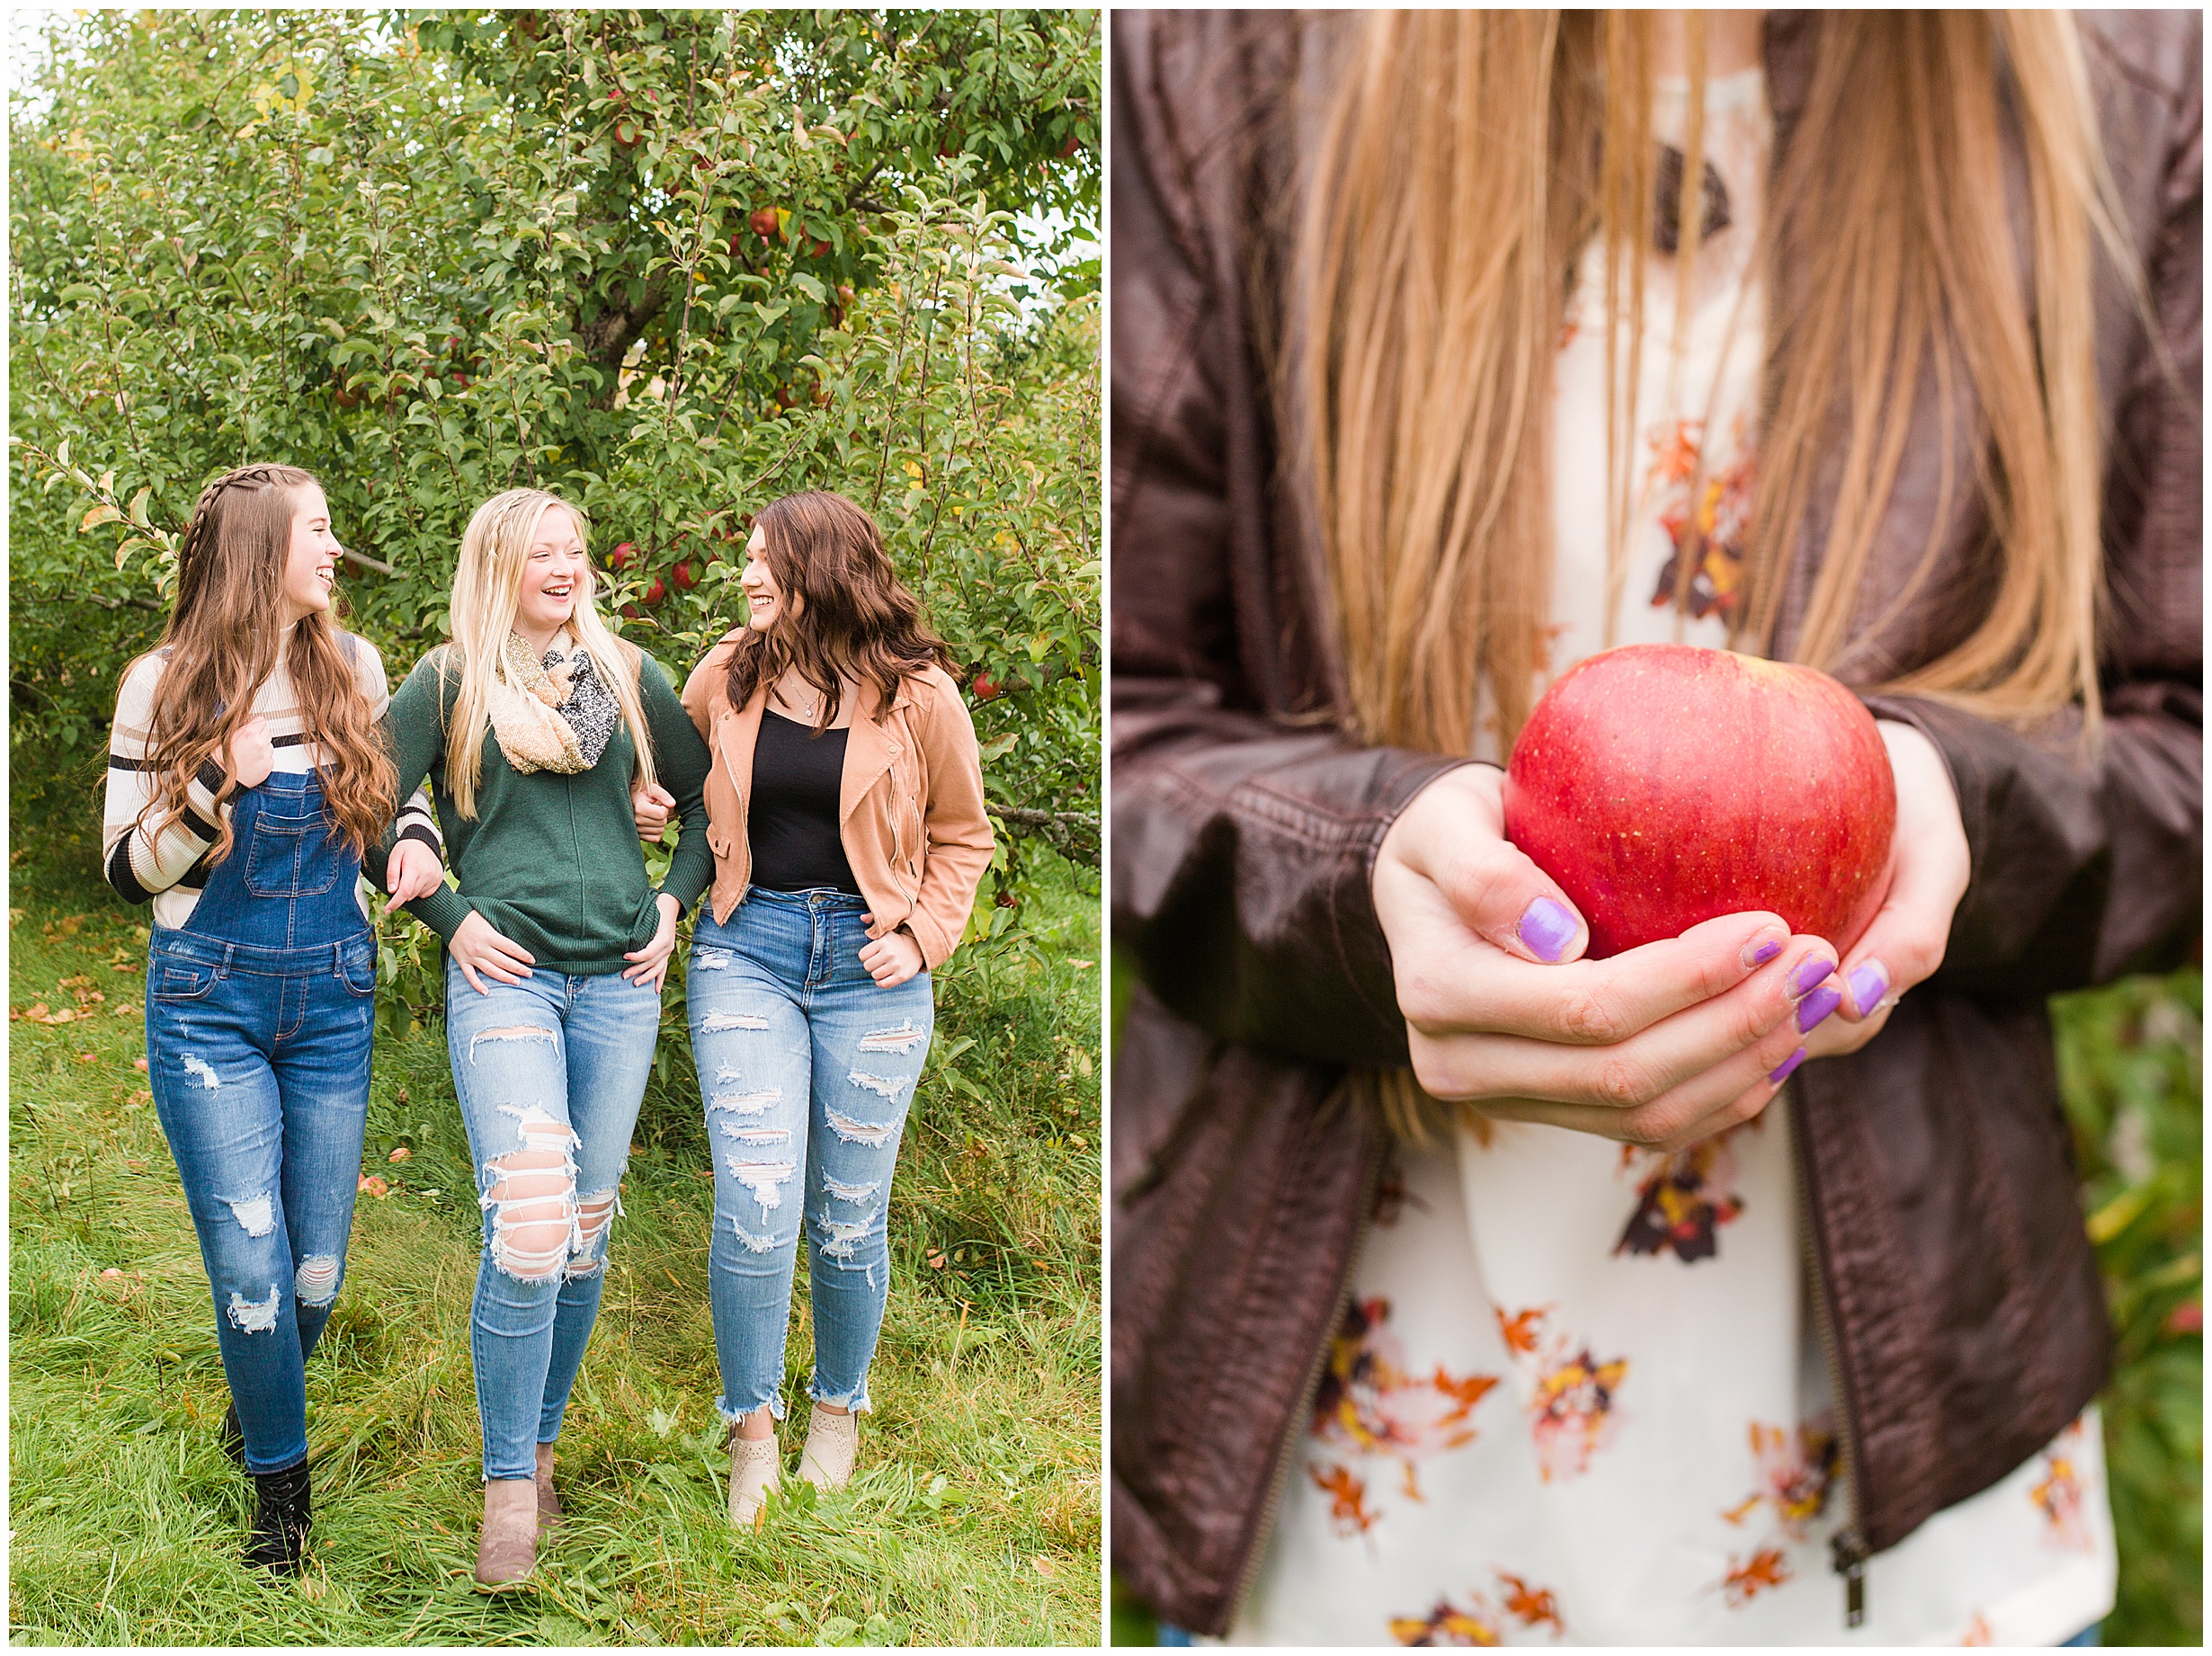 Iowa City Photographers - Apple Orchard Styled Senior Session -Megan Snitker Photography_0064.jpg